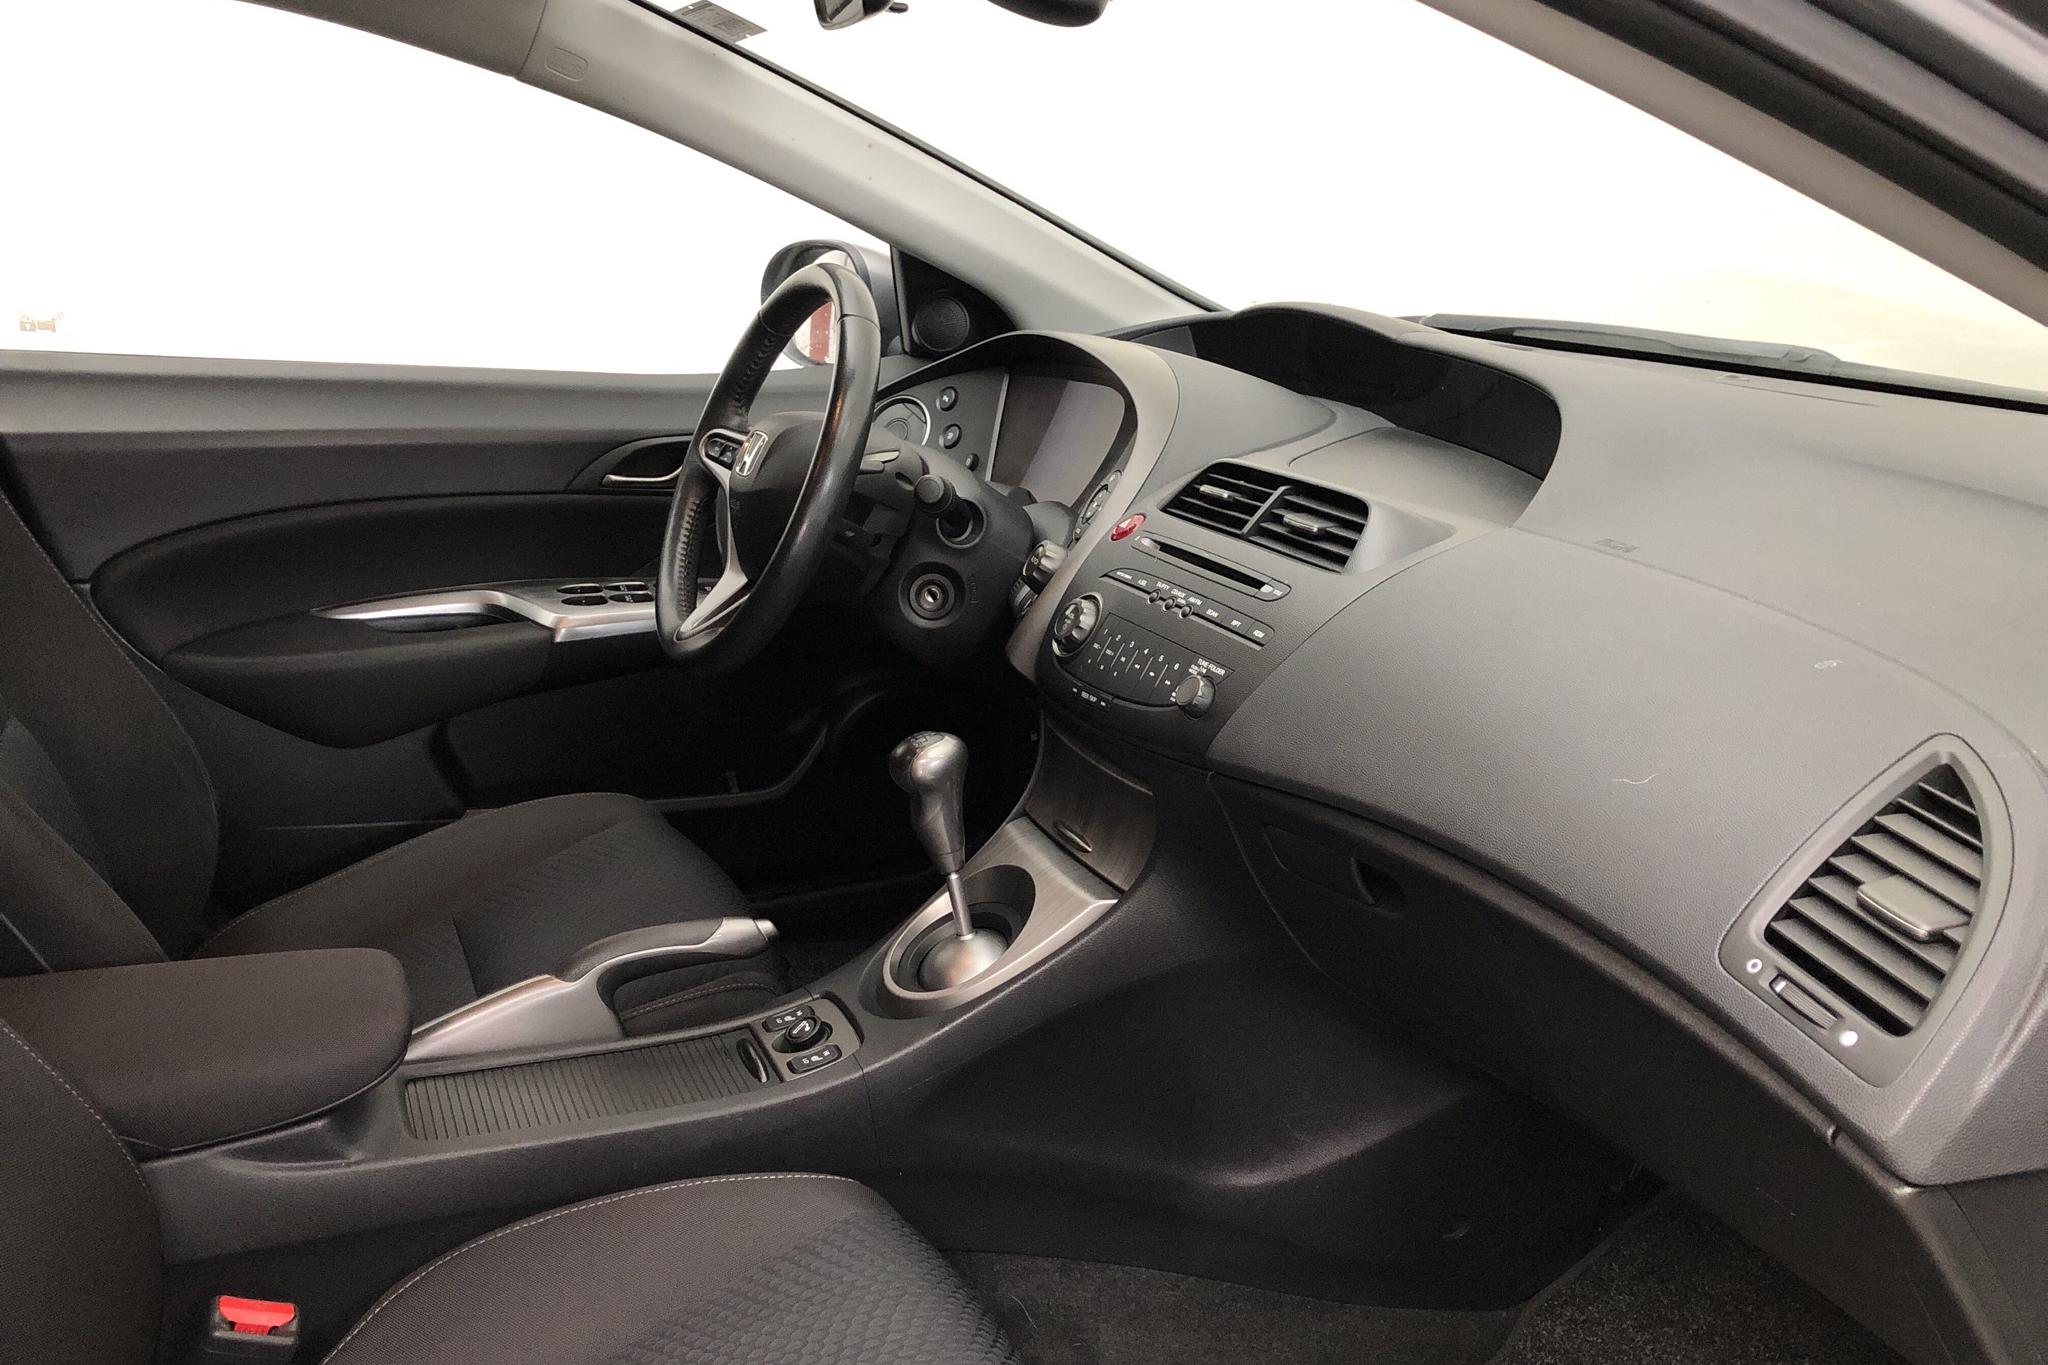 Honda Civic 1.8 5dr (140hk) - 156 480 km - Manual - Light Grey - 2010